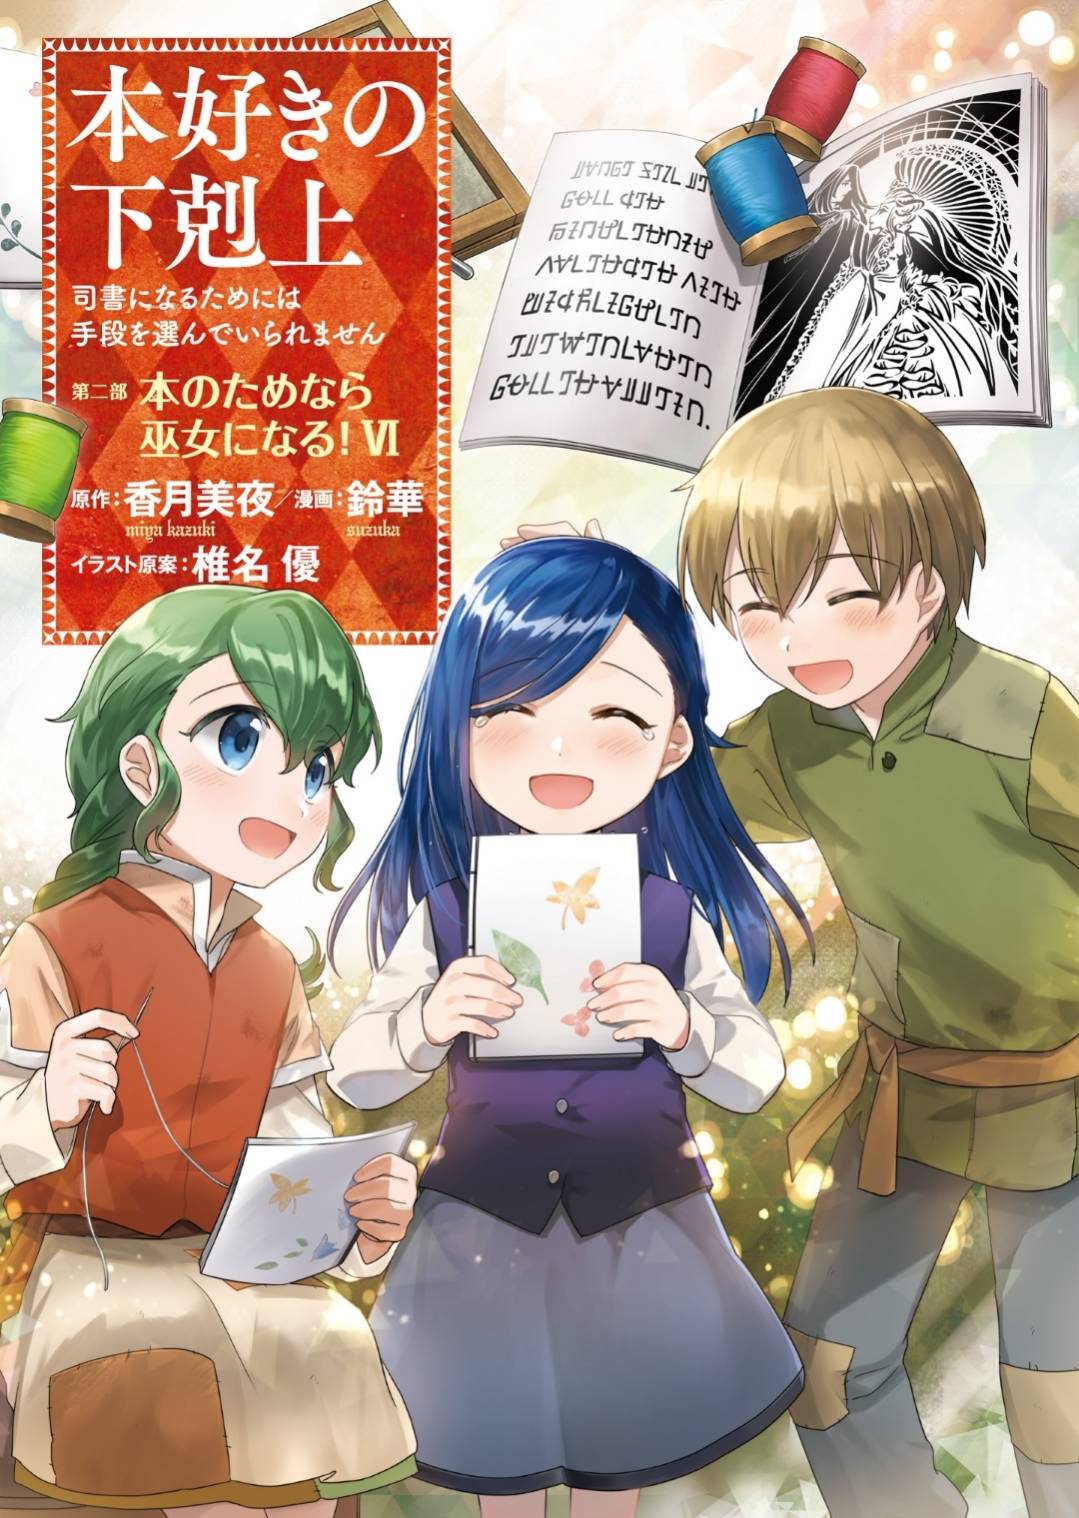  Ascendance of a Bookworm: Fanbook 1 eBook : Kazuki